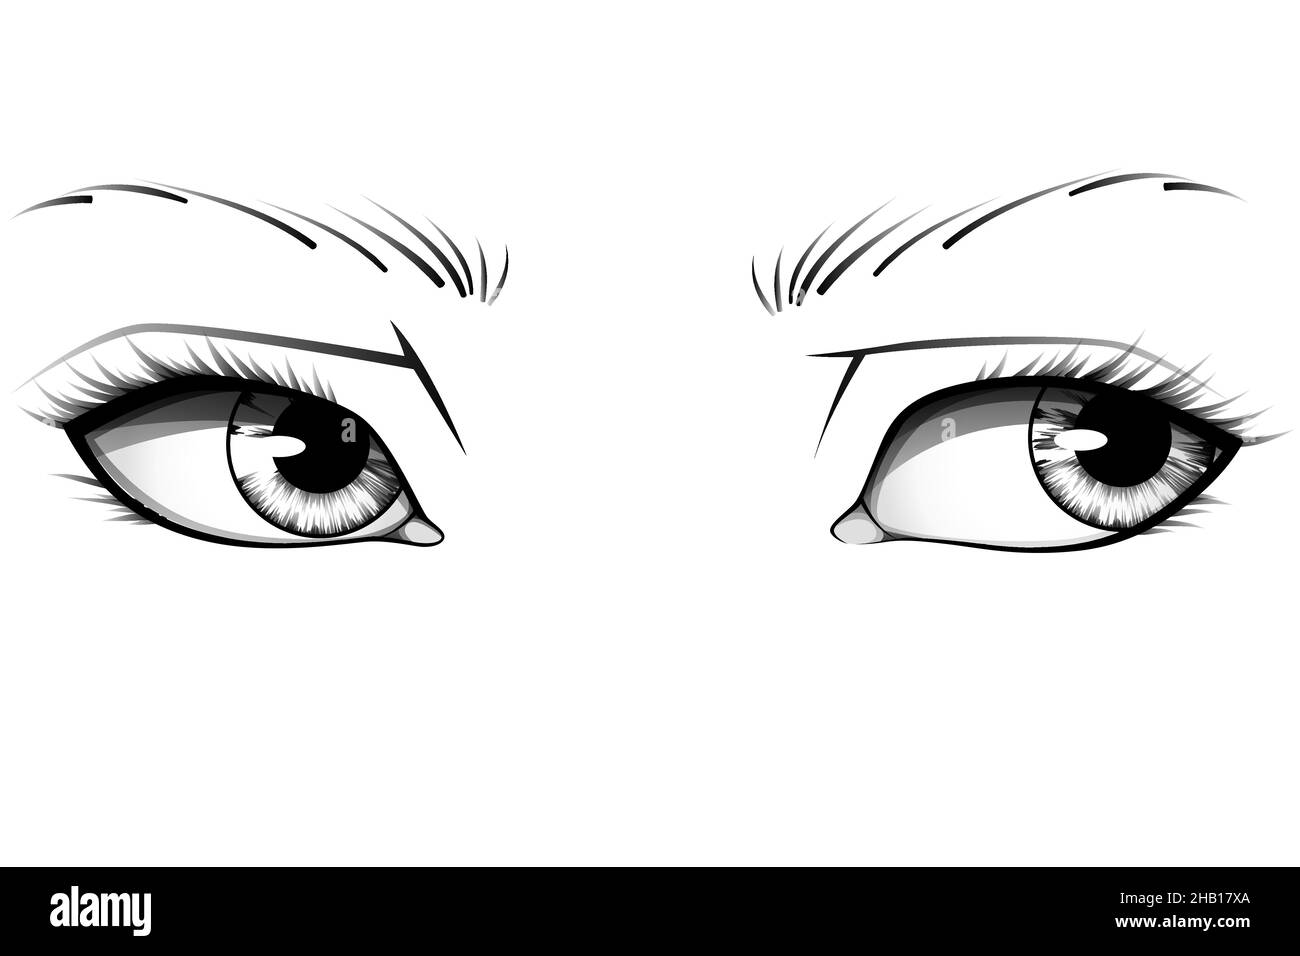 How to Draw Anime & Manga Eyebrows - AnimeOutline